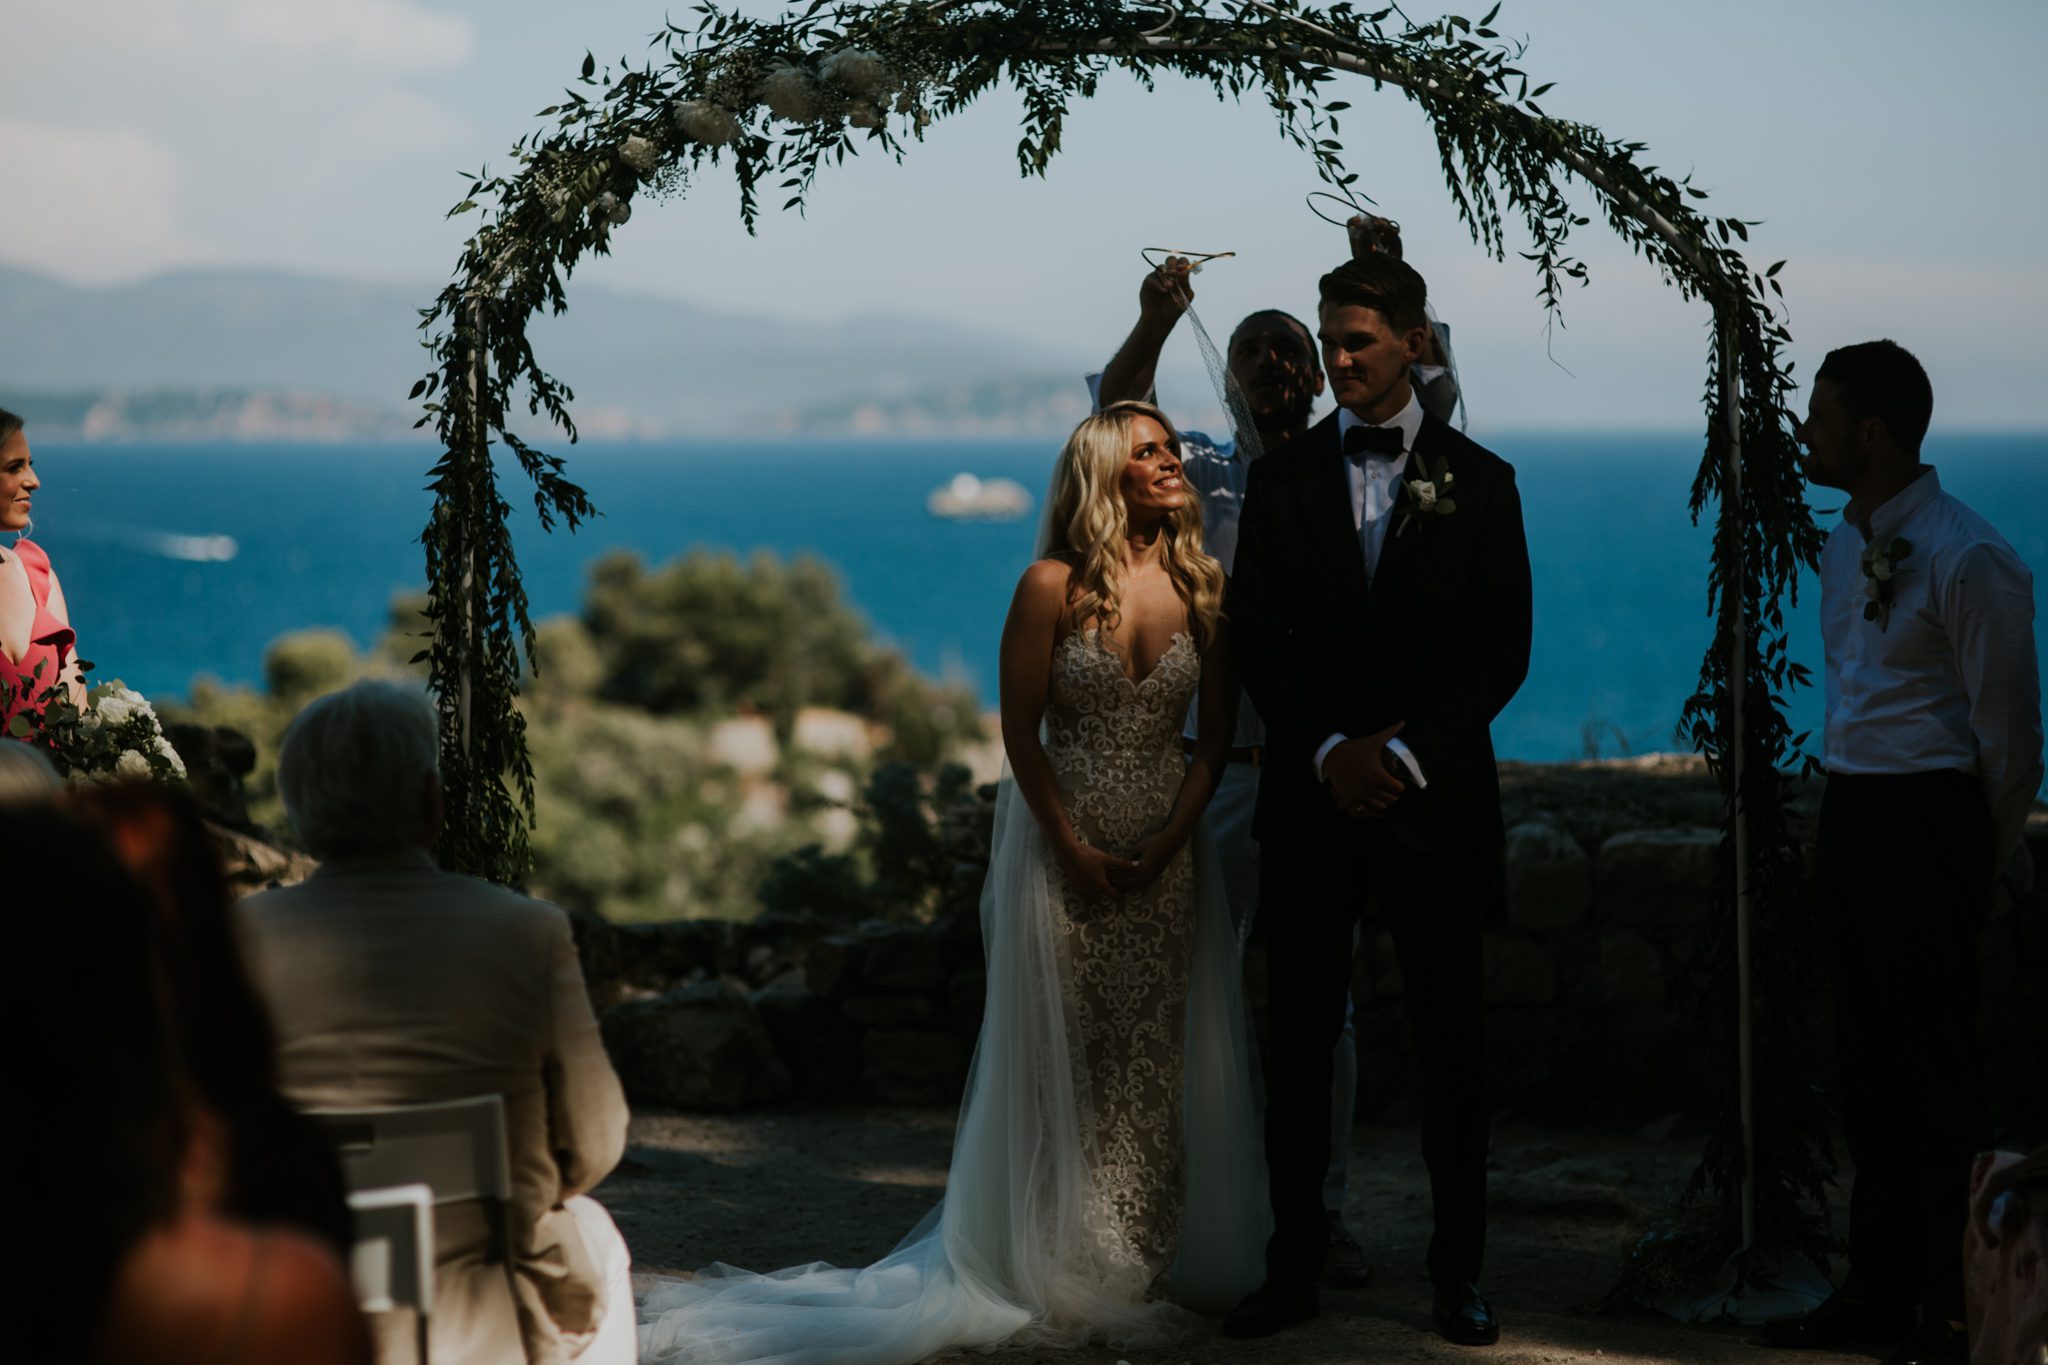 Greek wedding ceremony overlooking the sea